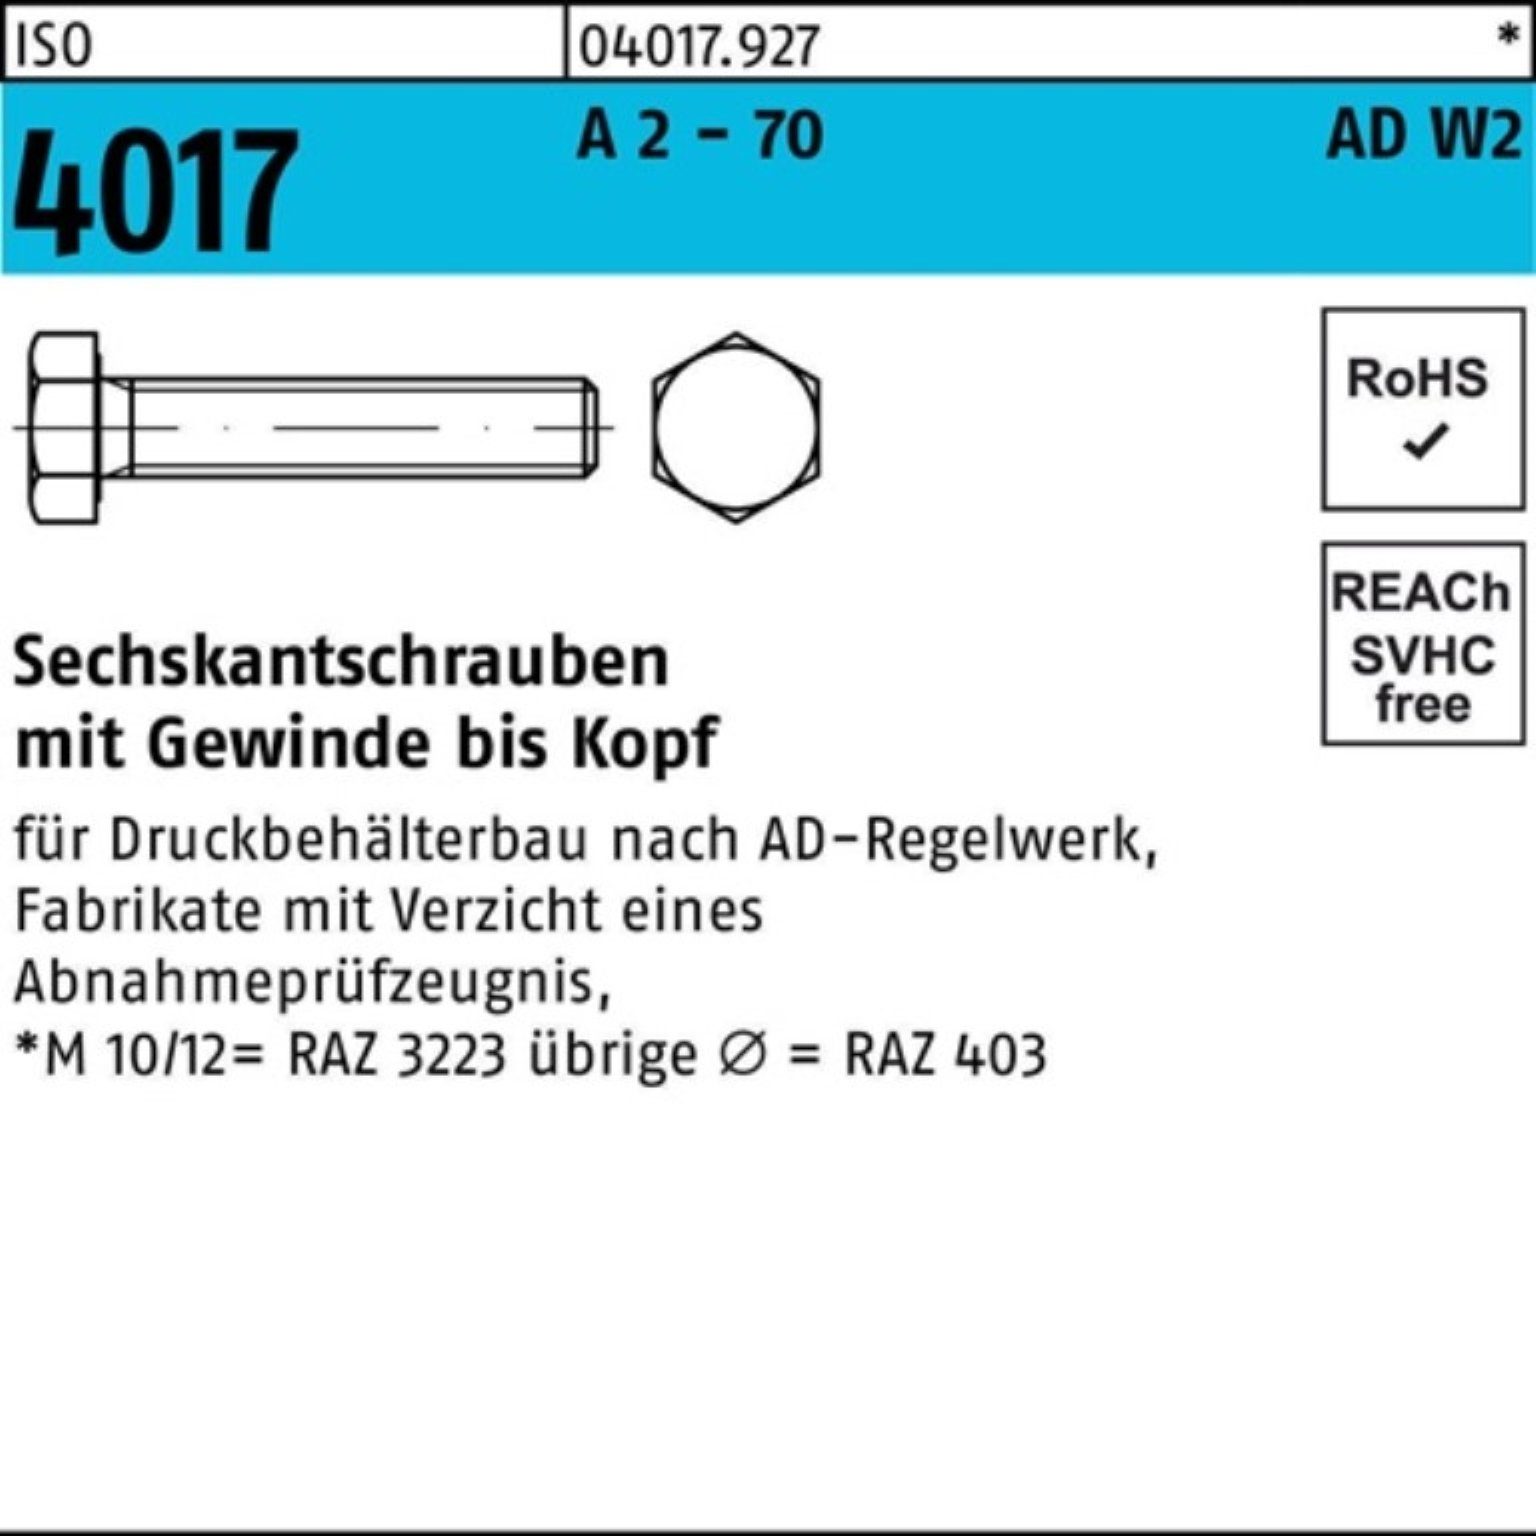 Sechskantschraube ISO 70 M20x Pack Bufab - St A VG 100er 2 25 4017 55 AD-W2 Sechskantschraube